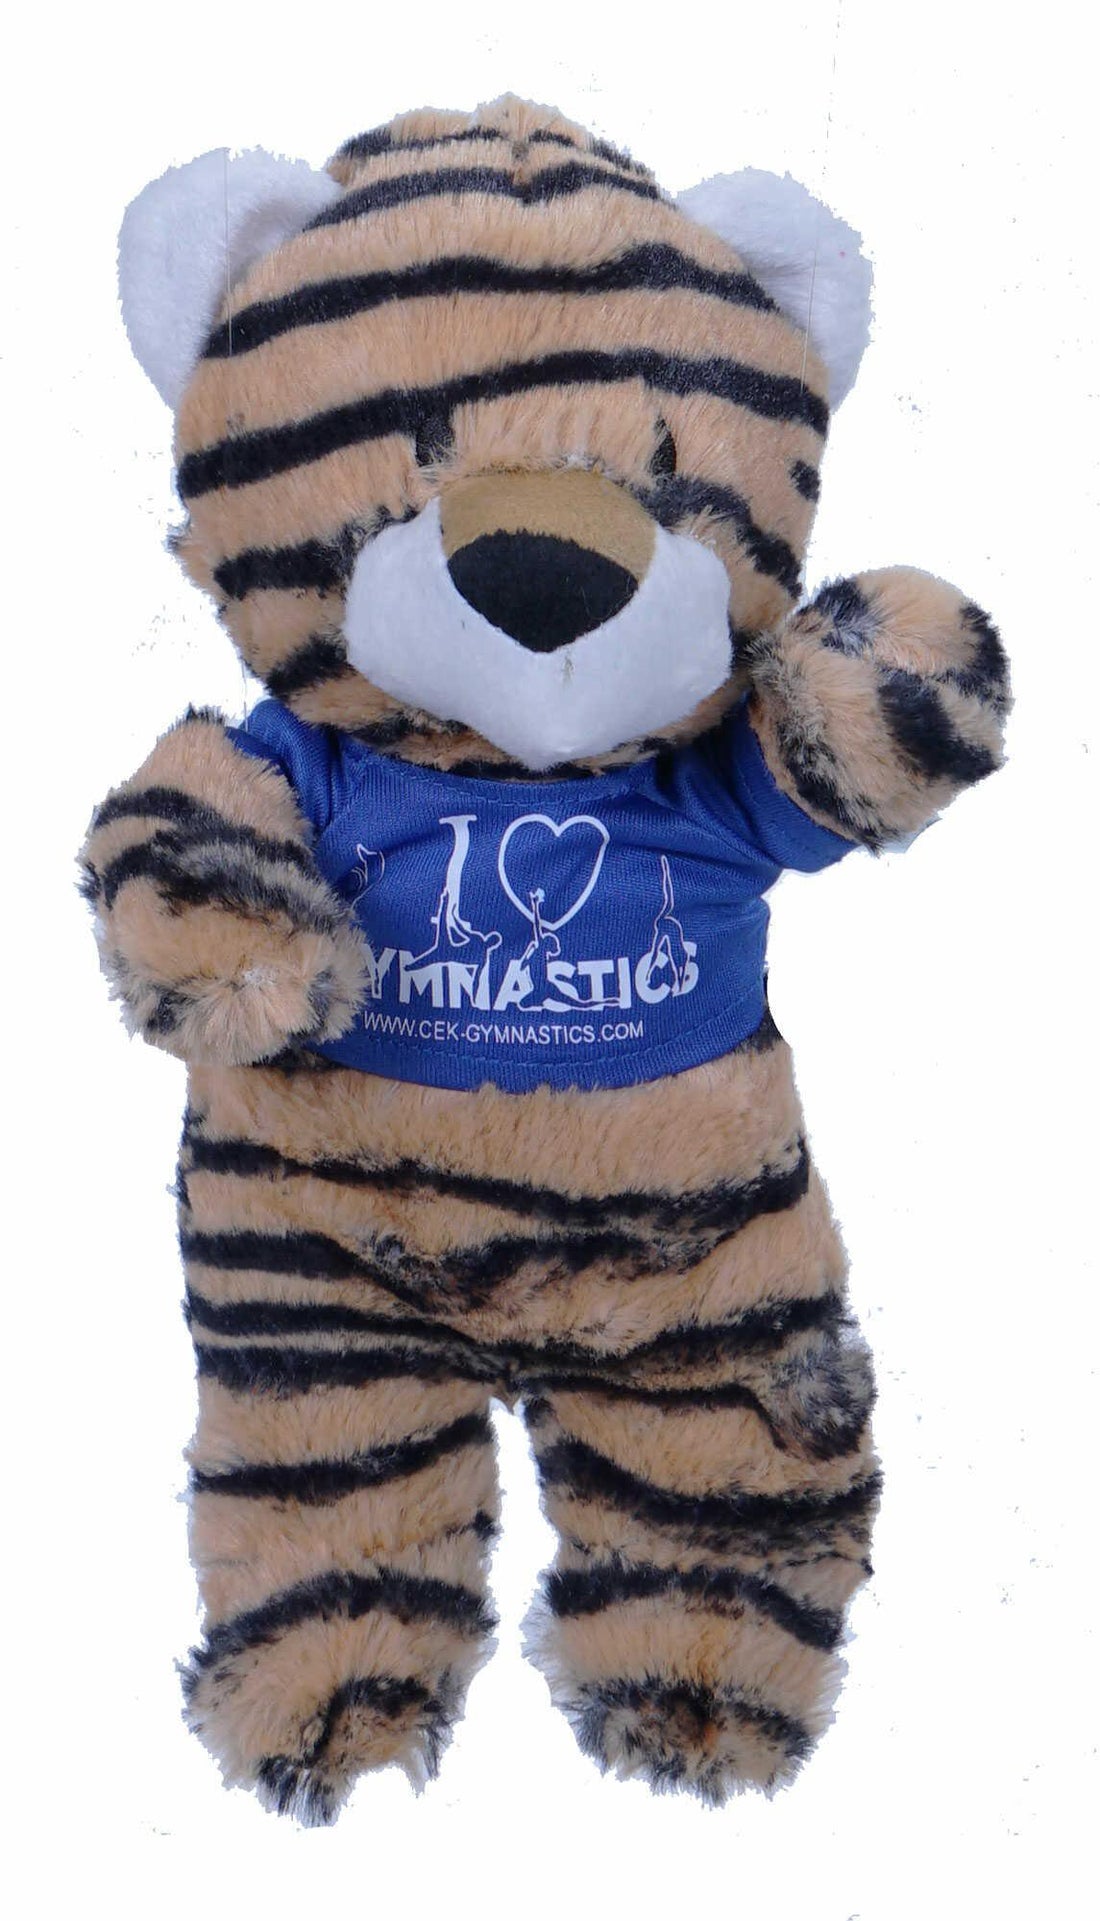 Peluche tigre con camiseta promocional